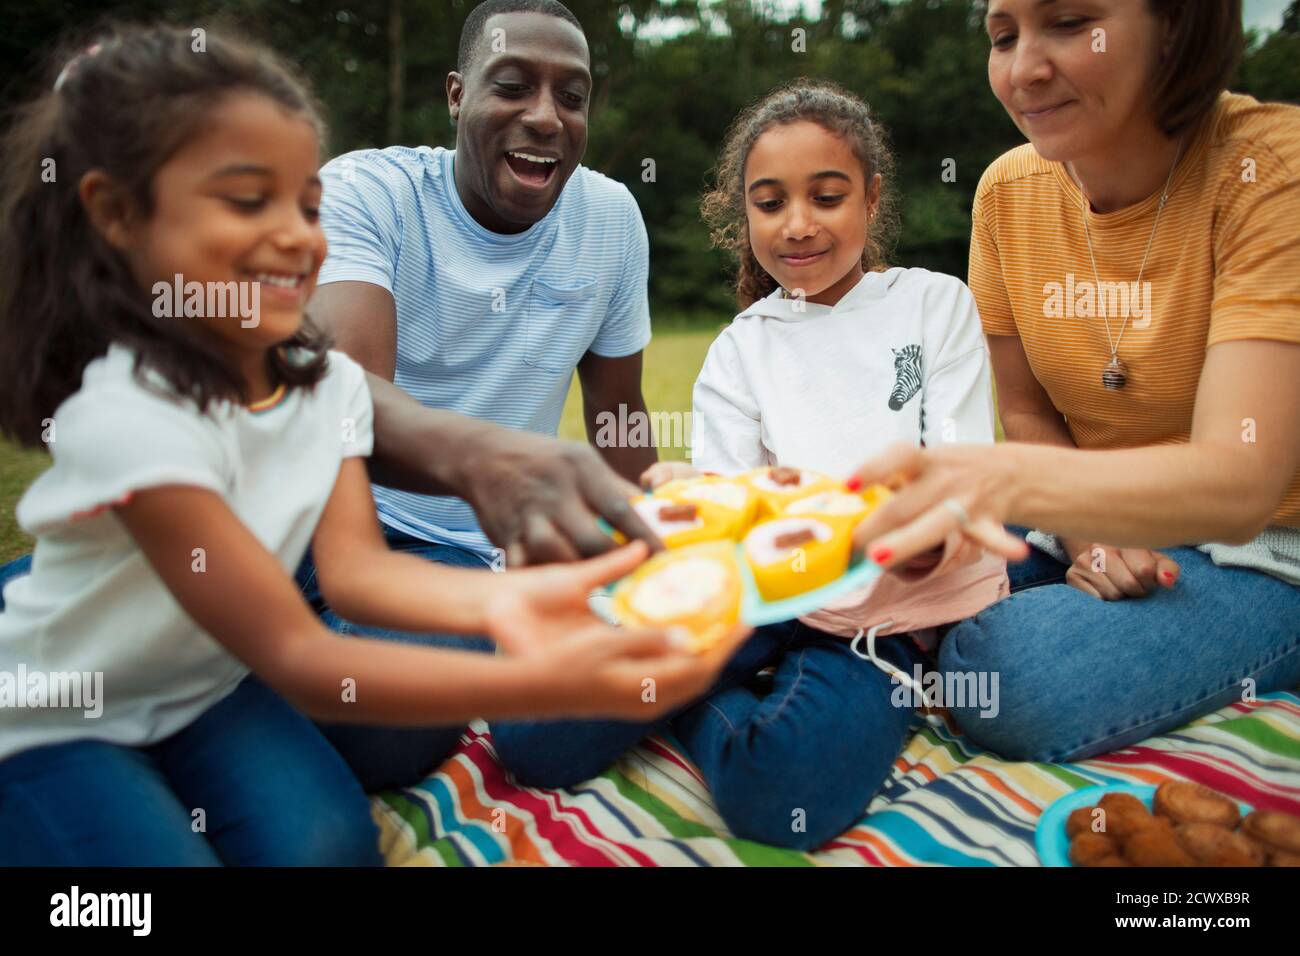 Family enjoying cupcakes on picnic blanket in park Stock Photo